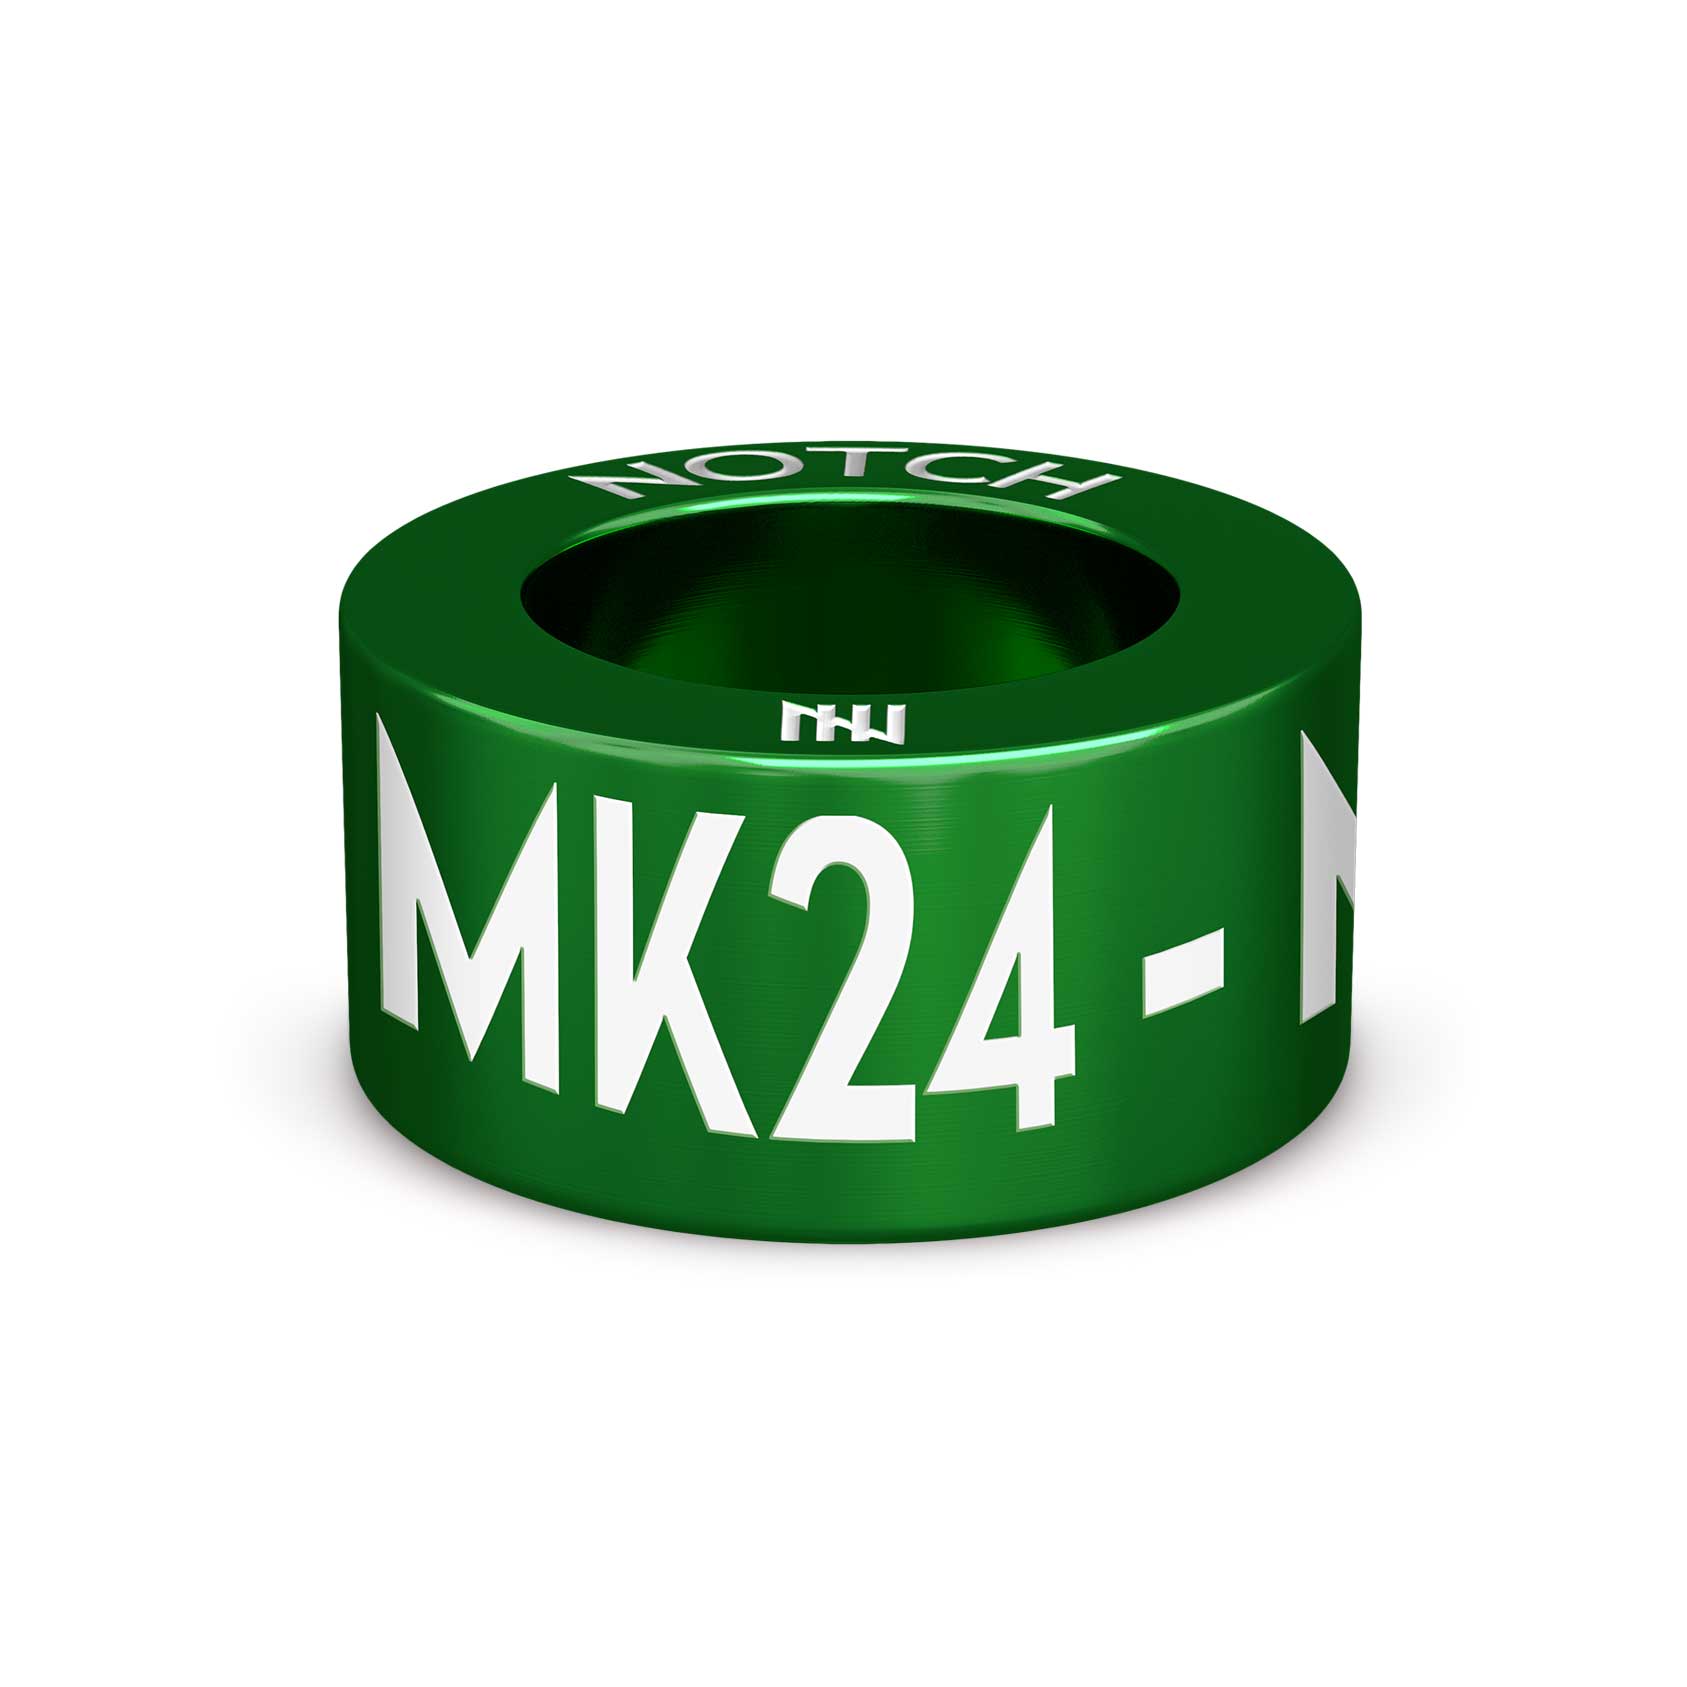 MK24 - My Way NOTCH Charm